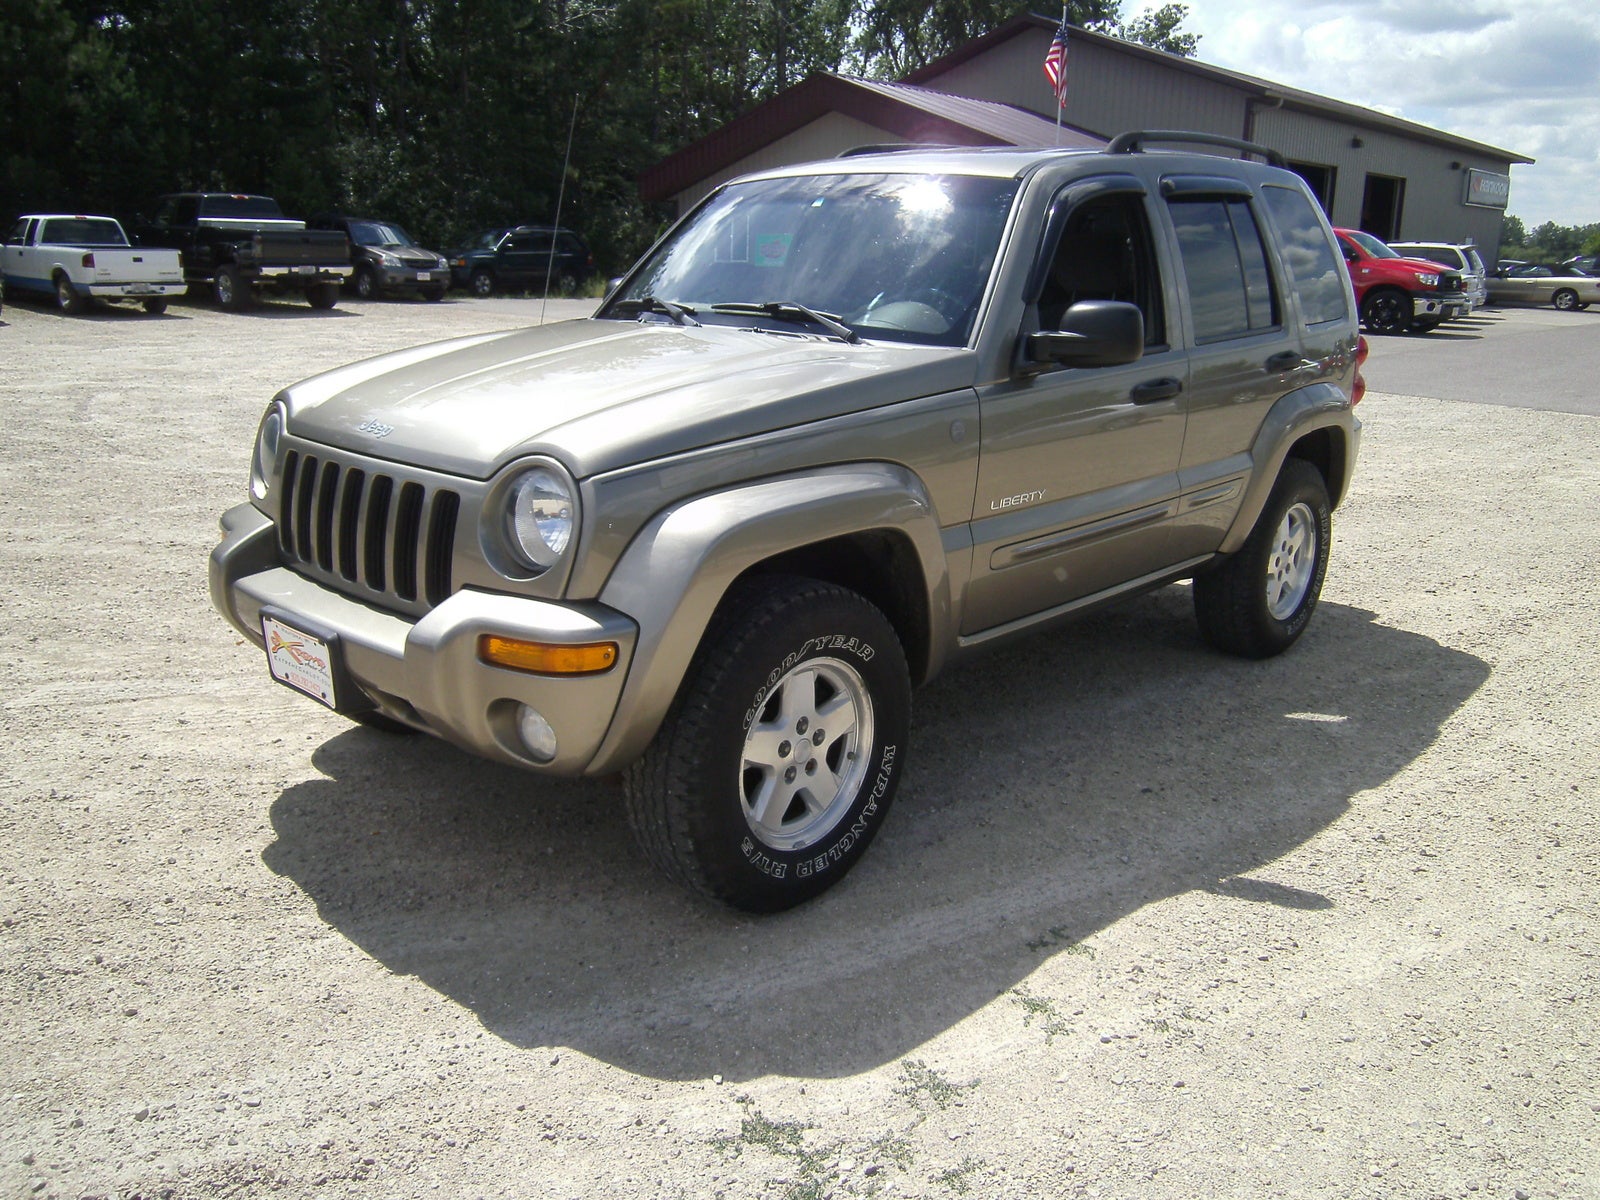 2003 Jeep liberty transmission slipping